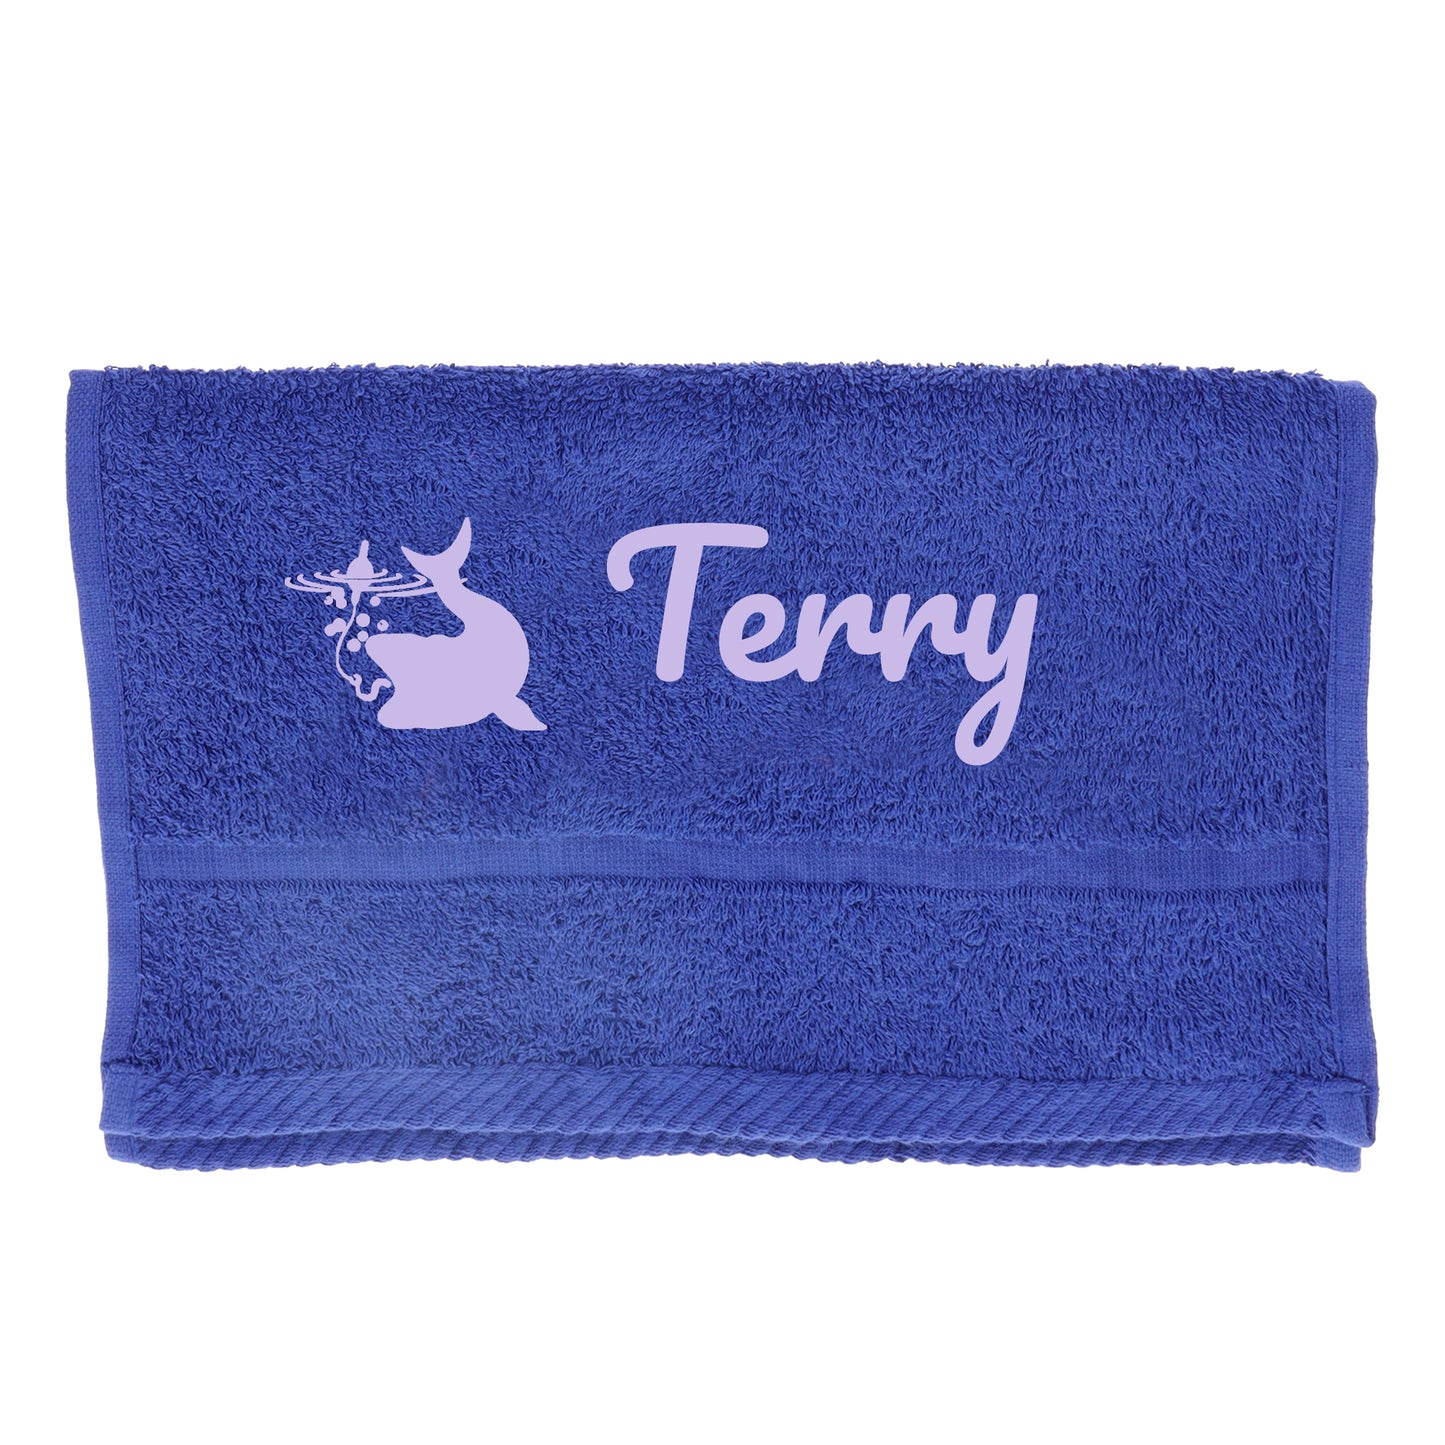 Personalised Embroidered Fishing Towel  - Always Looking Good -   